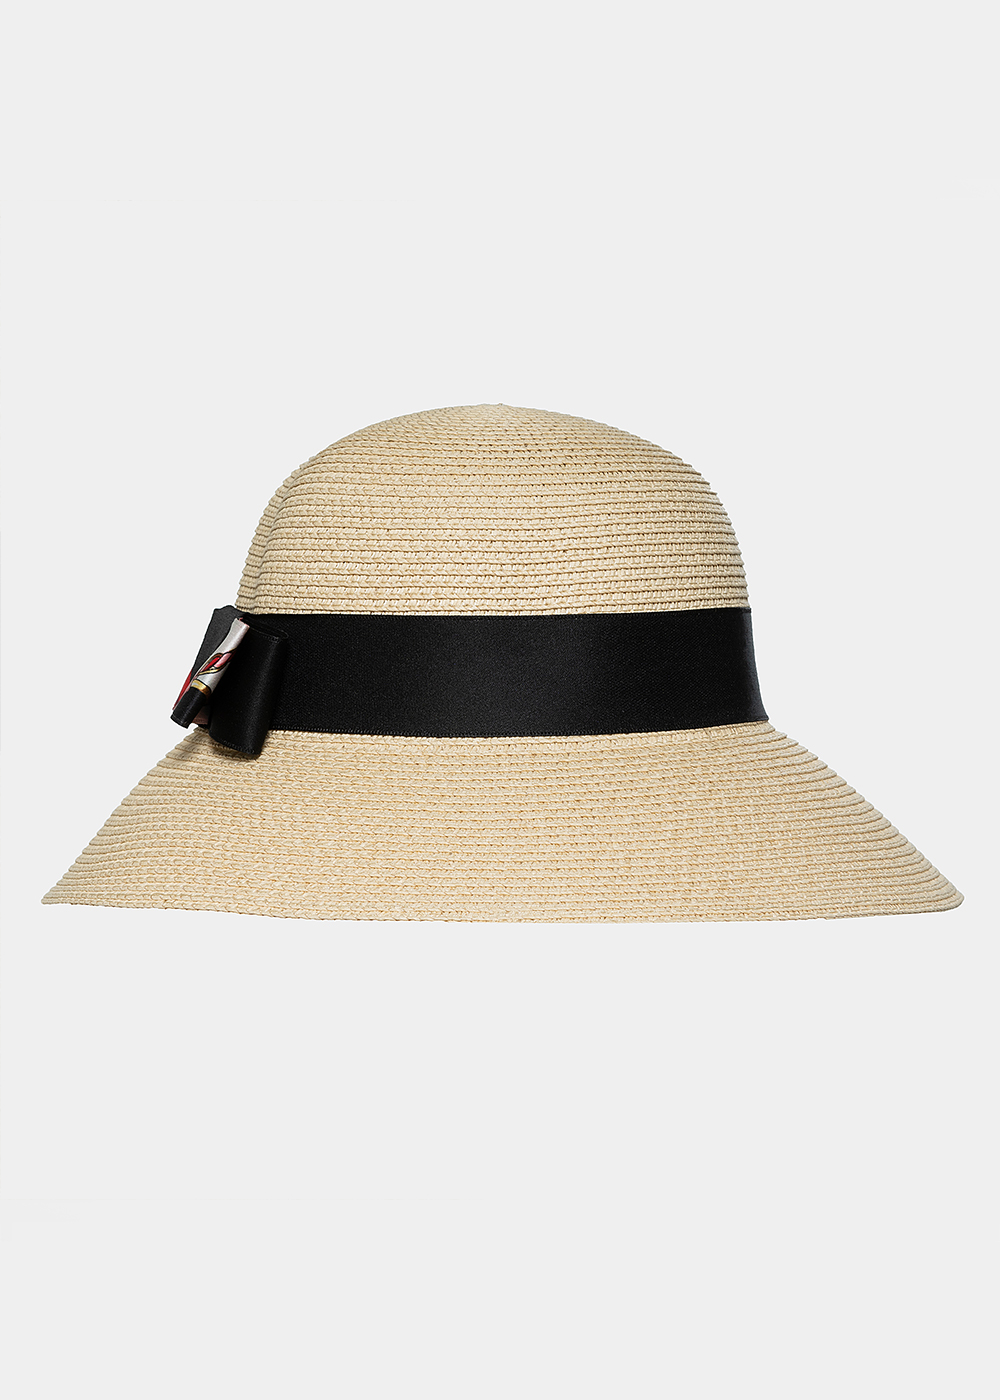 Beige hat with black foulard bow 